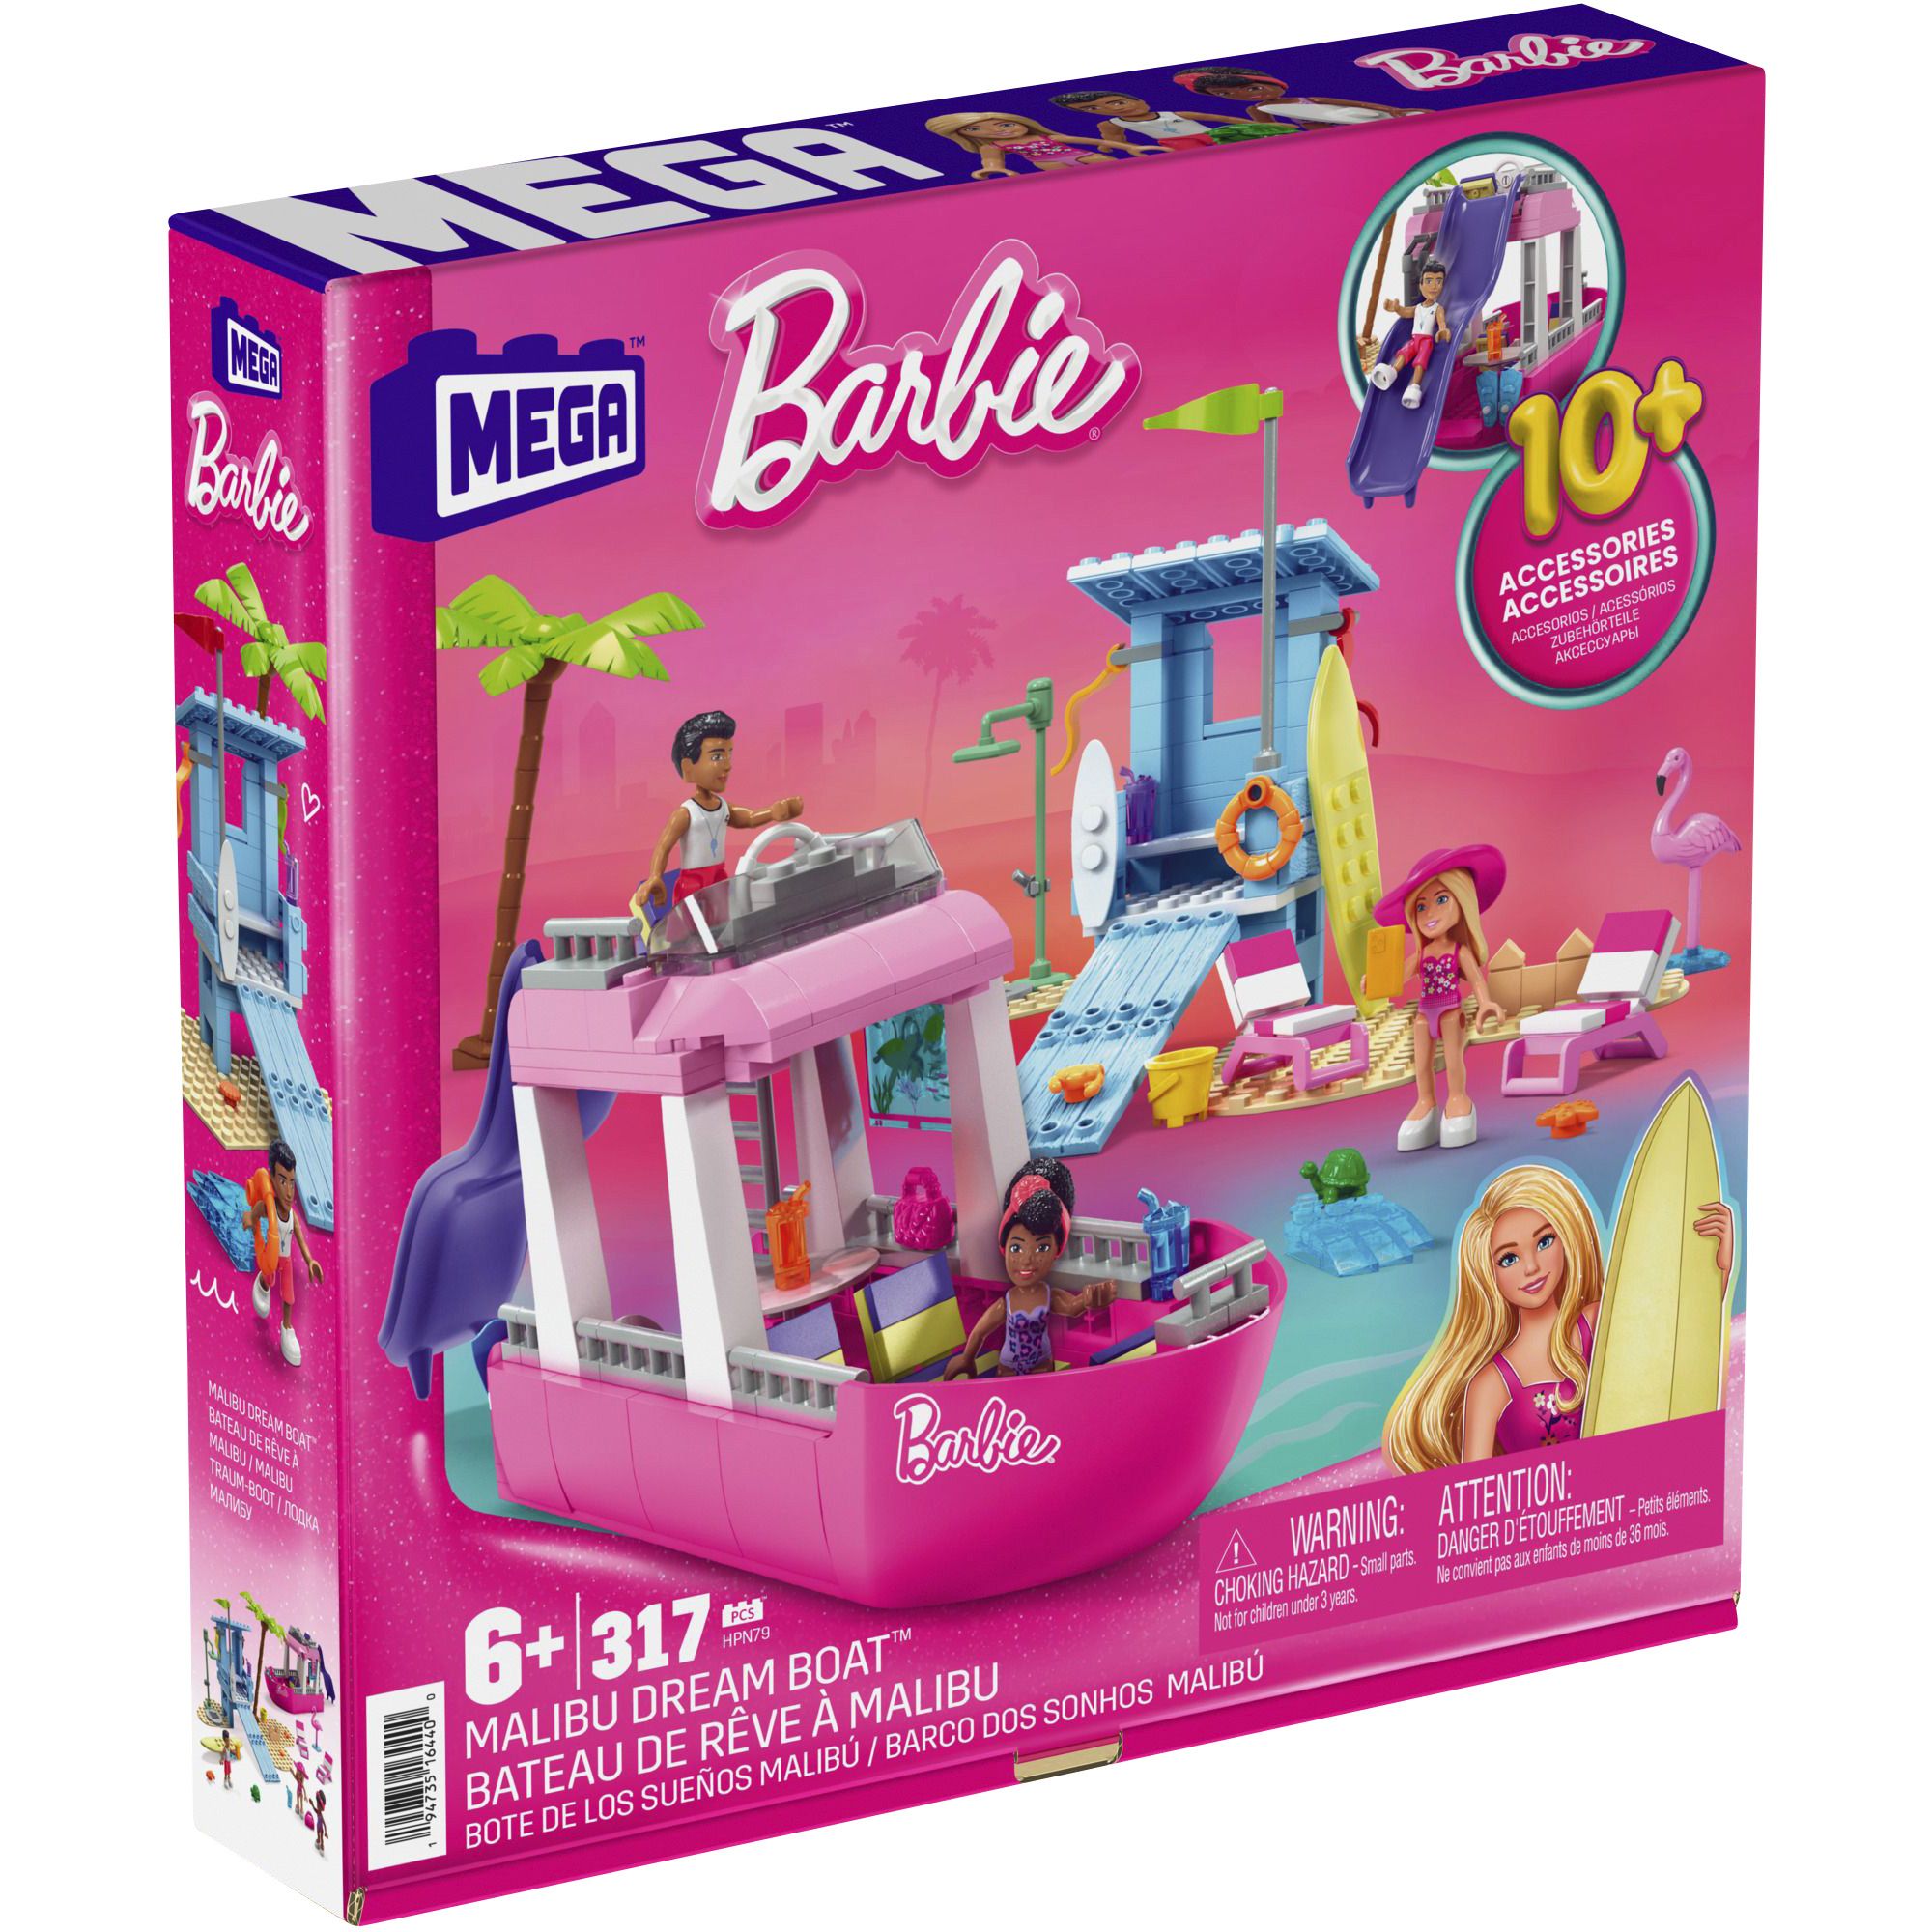 Barbie Boat